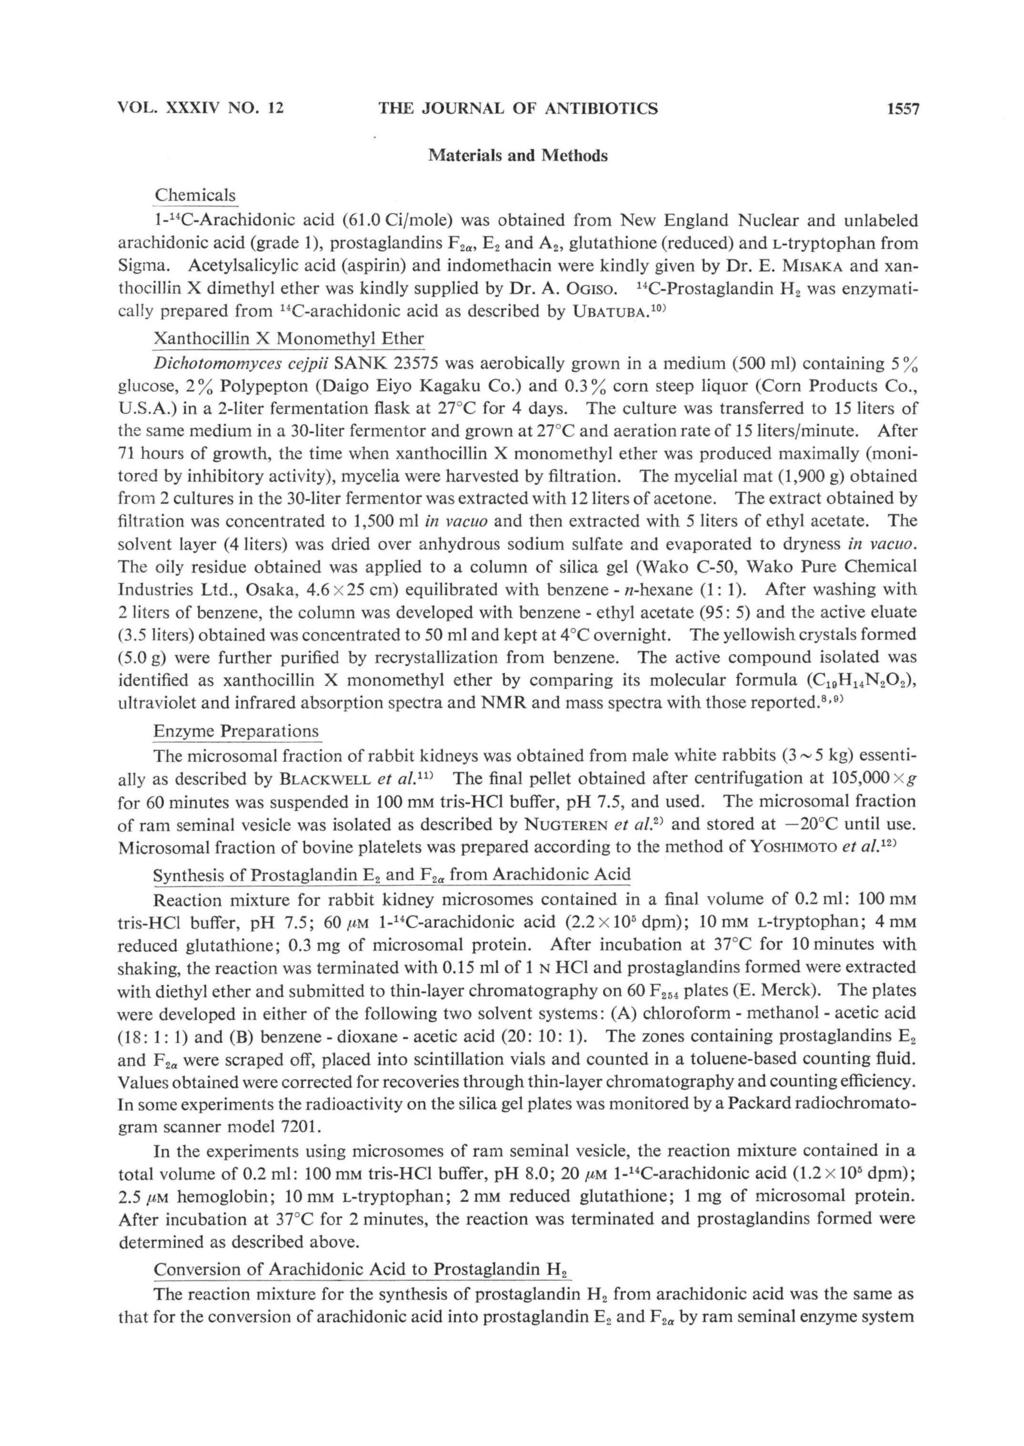 VOL. XXXIV NO. 12 THE JOURNAL OF ANTIBIOTICS 1557 Materials and Methods Chemicals 1-14C-Arachidonic acid (61.